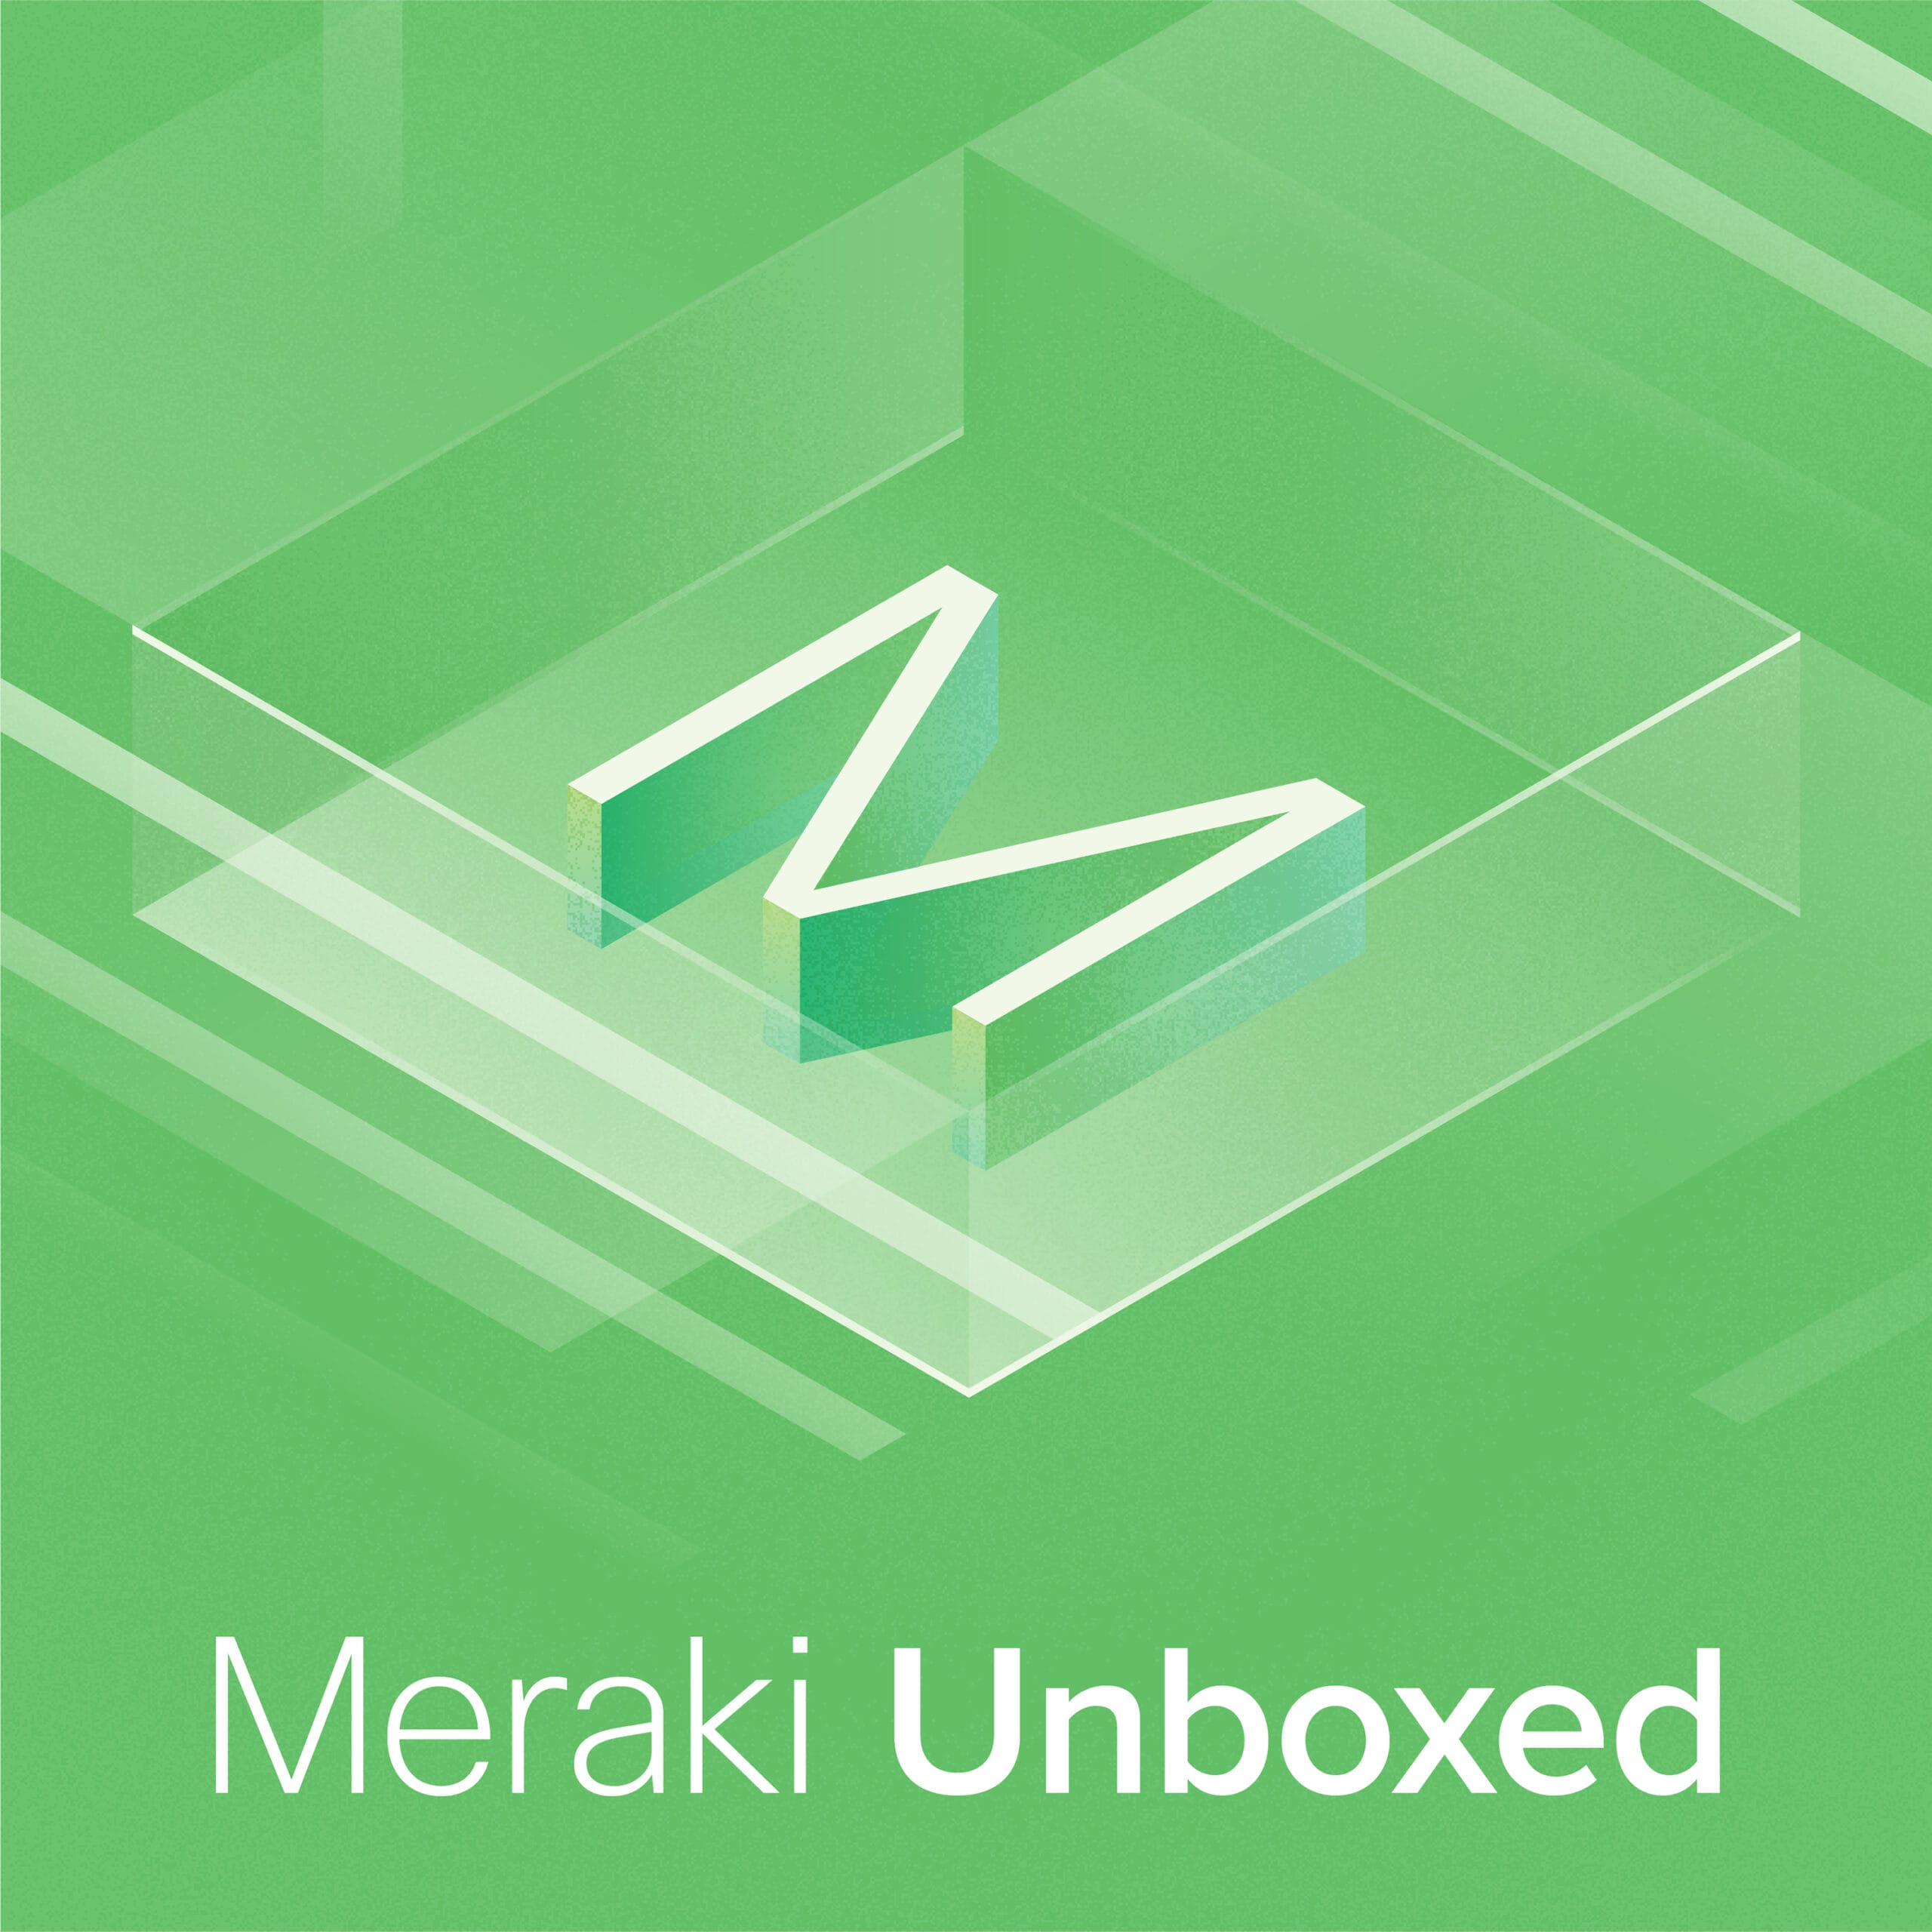 Talking APIs on the latest episode of Meraki Unboxed